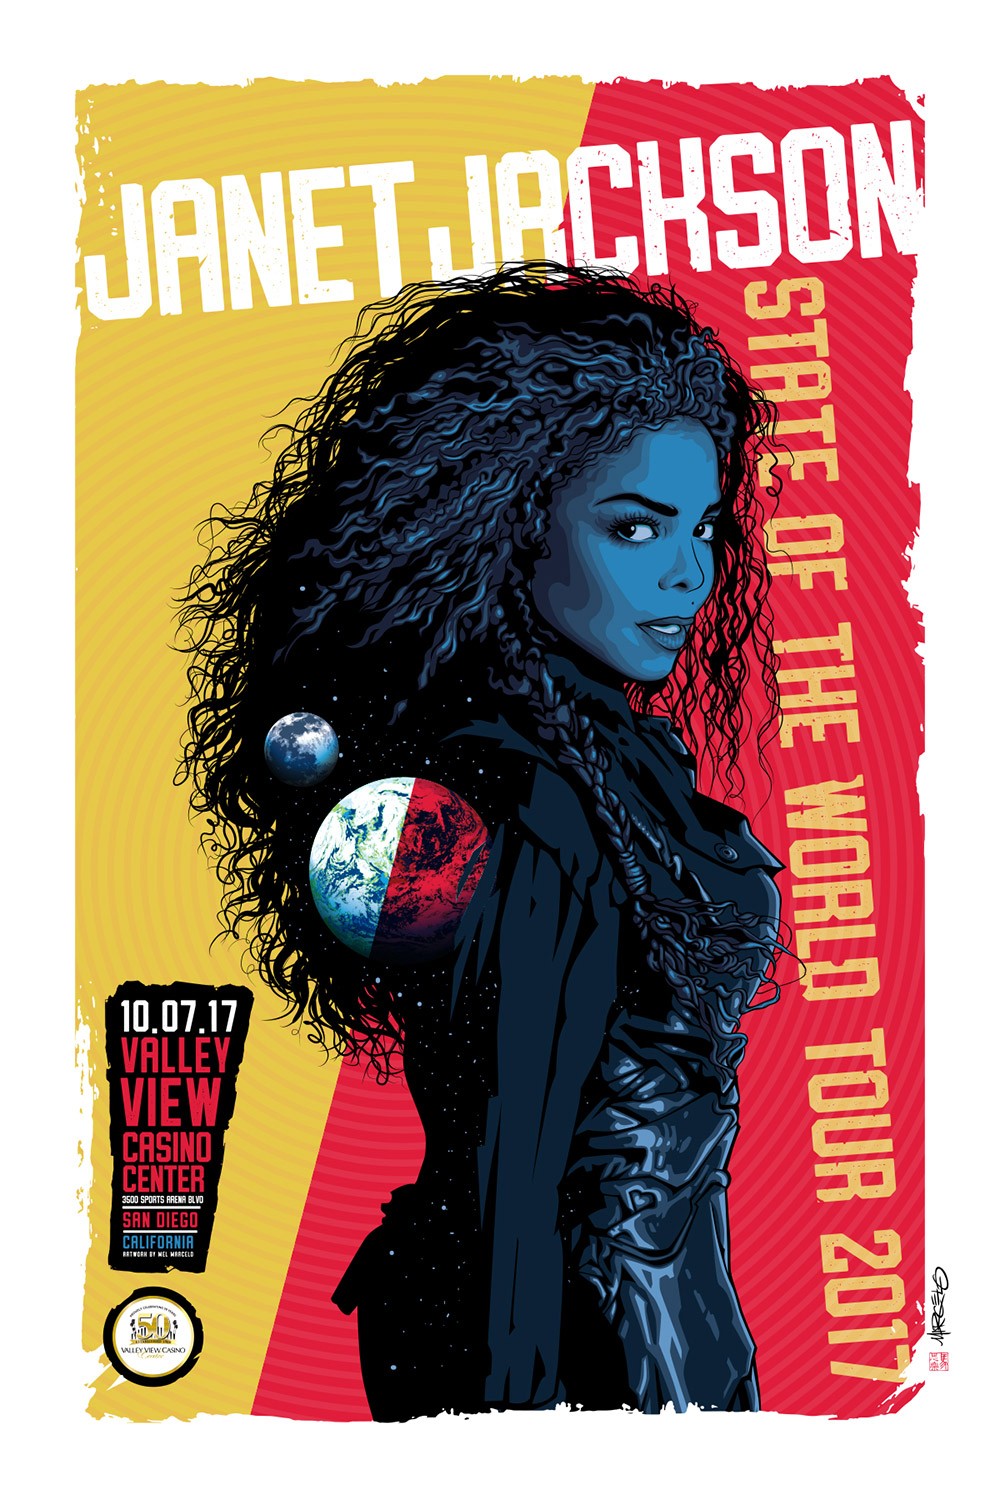 Janet Jackson illustration by Mel Marcelo